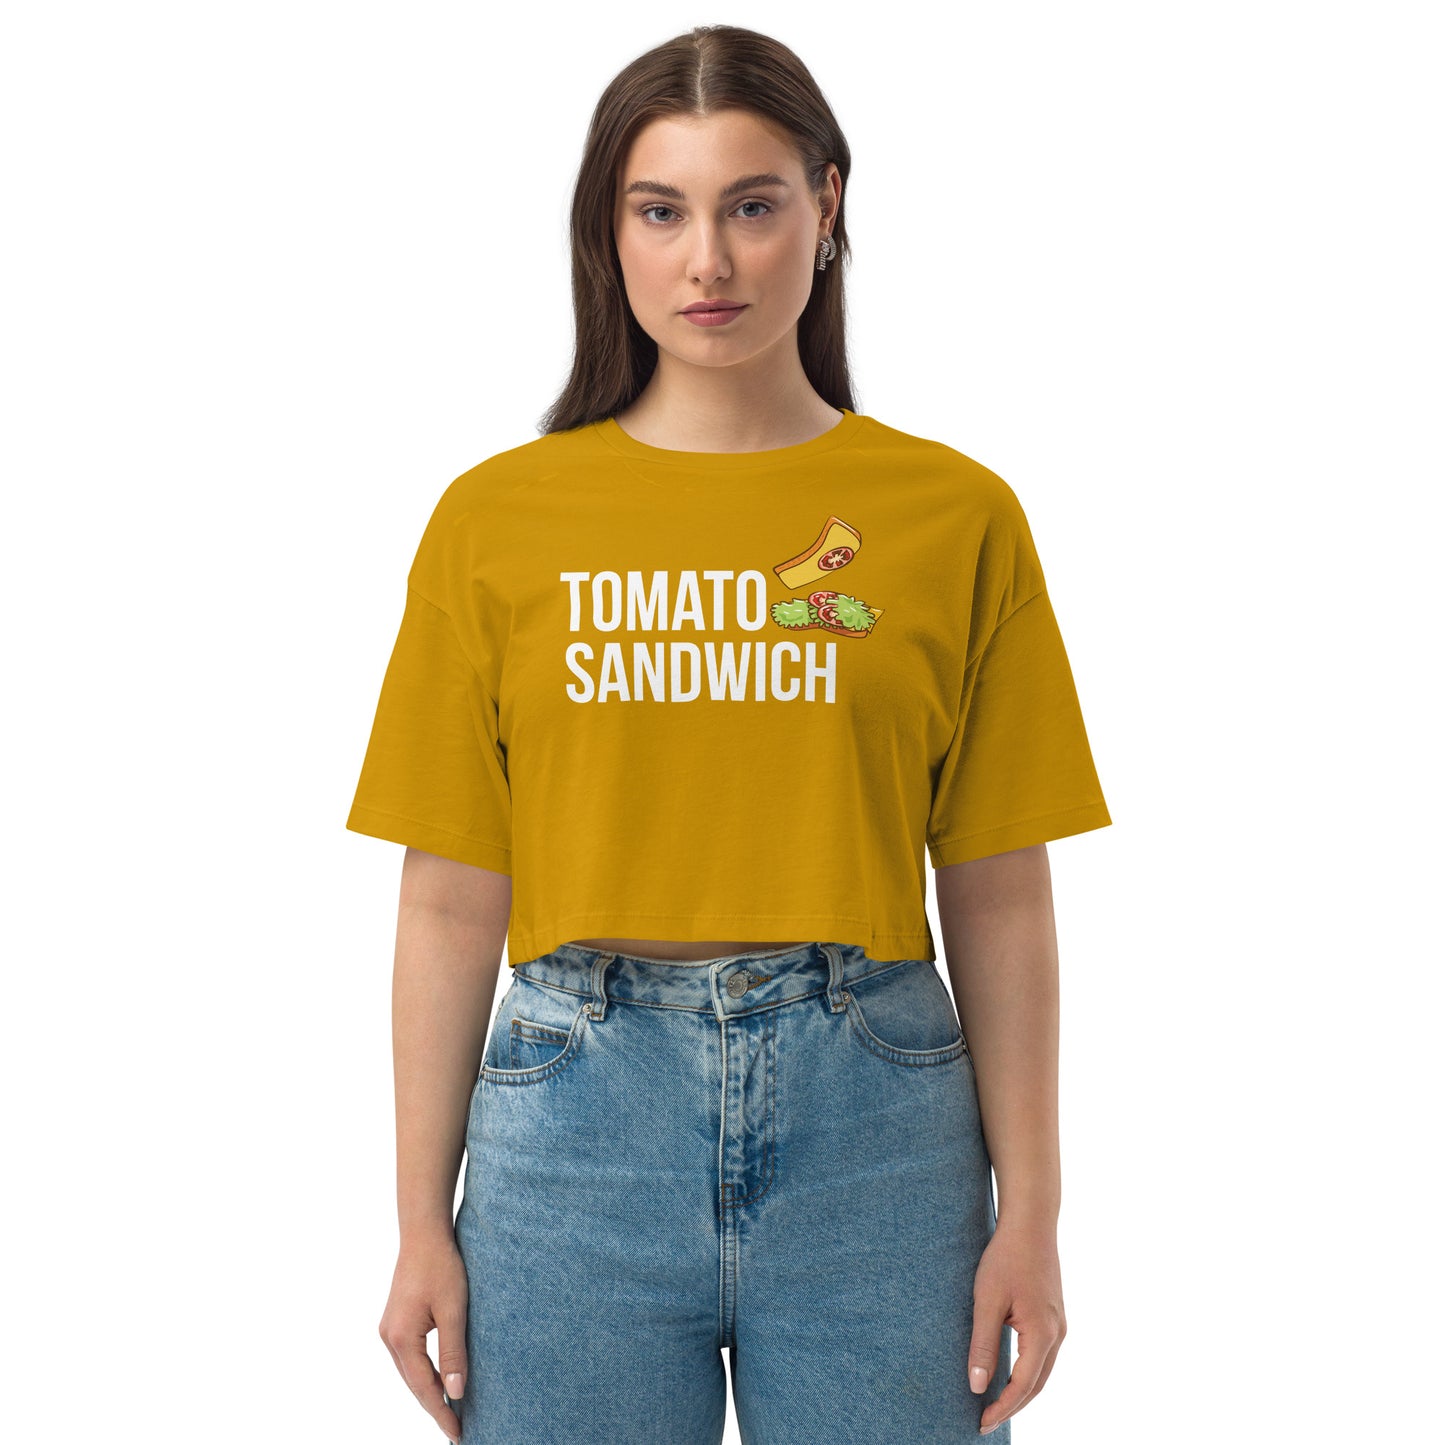 Tomato Sandwich / Loose Crop Top